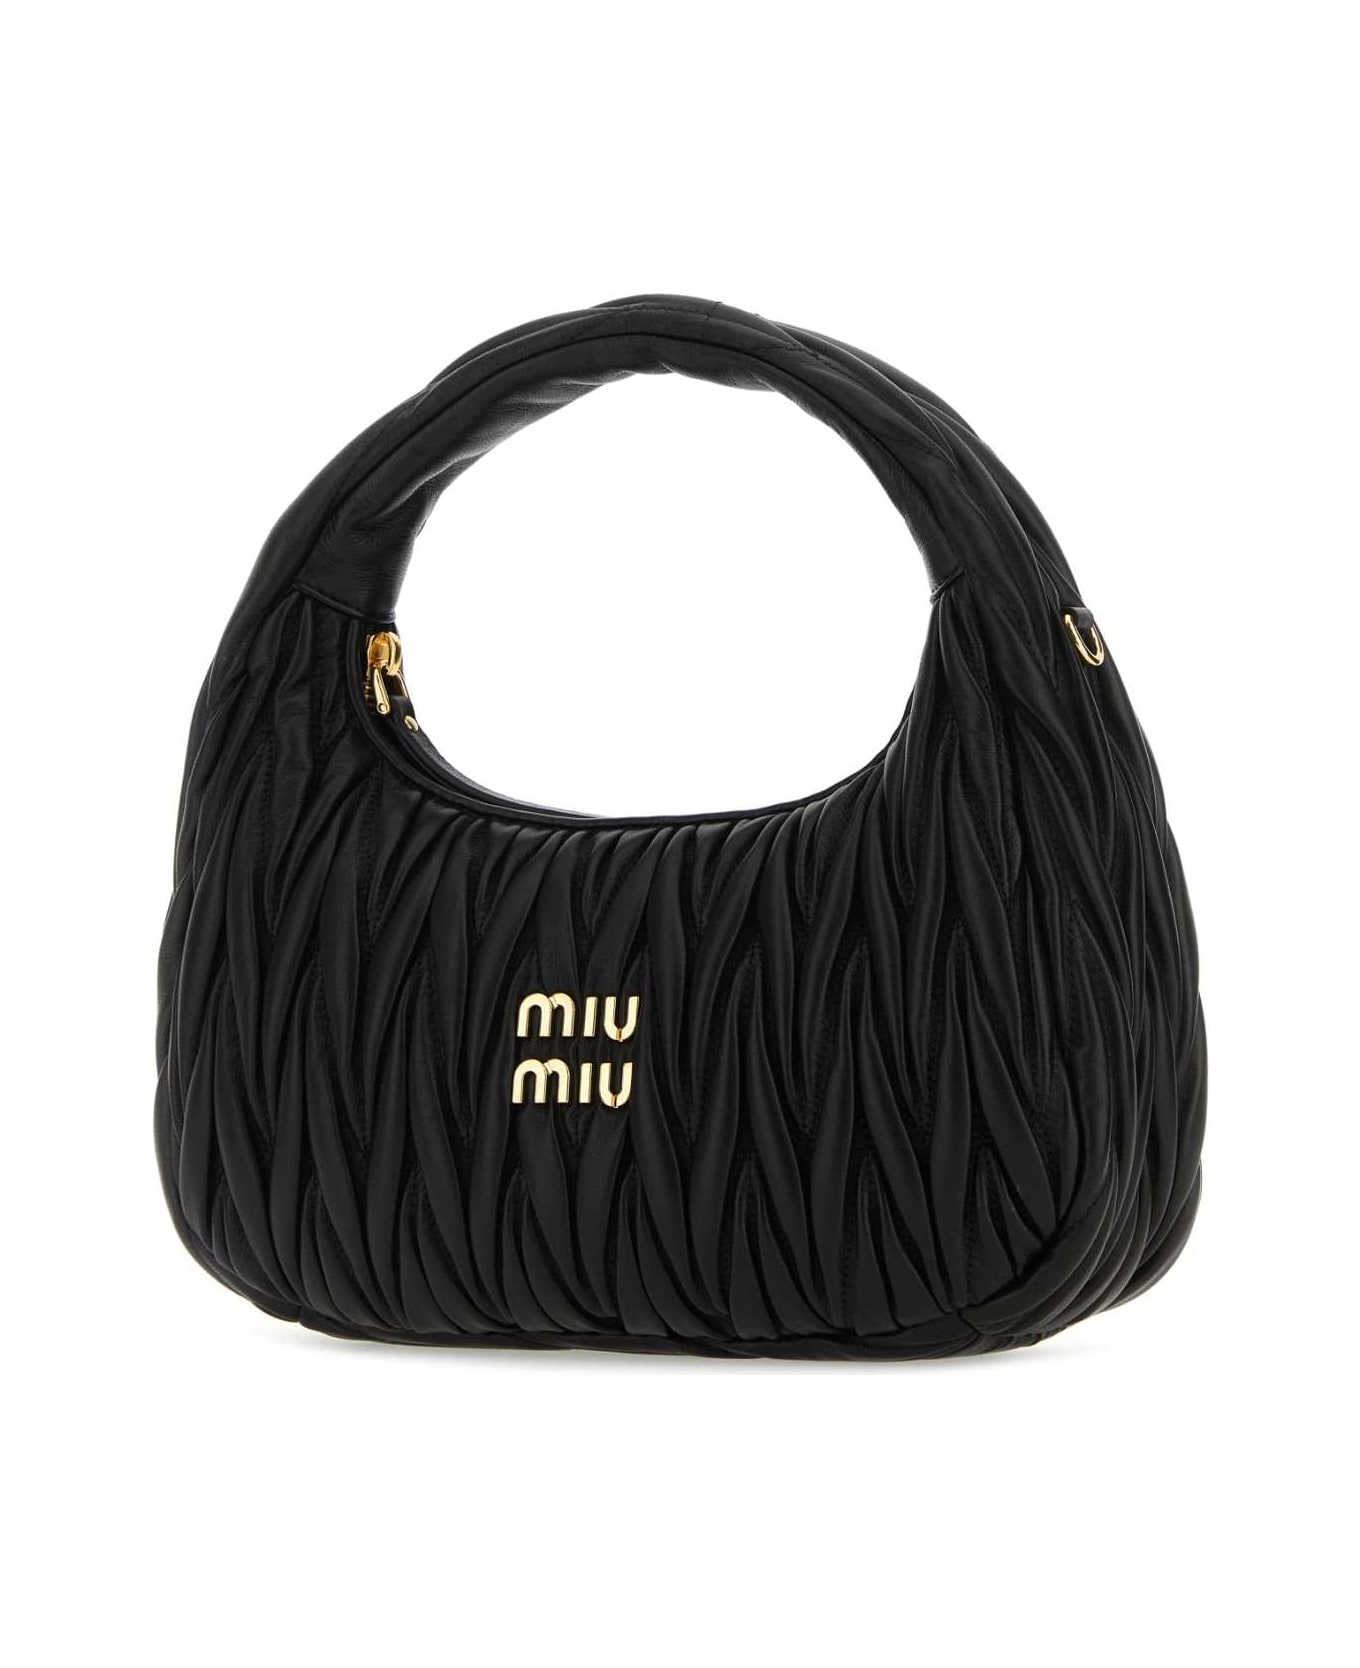 Miu Miu Black Nappa Leather Miu Wander Handbag - NERO